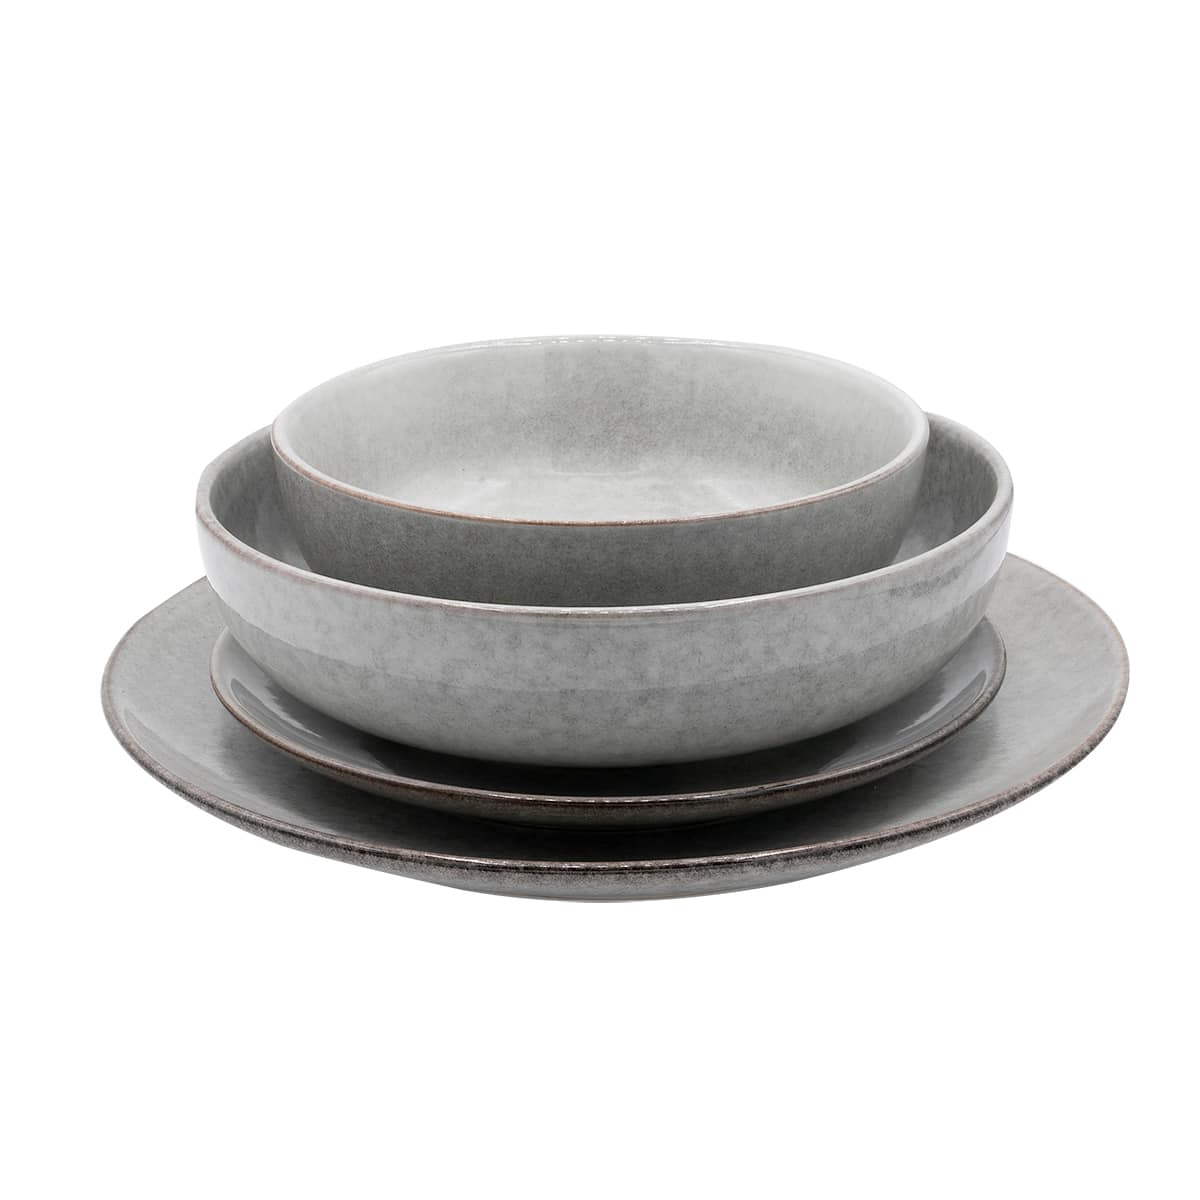 Cooks Professional Nordic Stoneware 20cm Side Plates, Set of 4, Reactive  Glaze